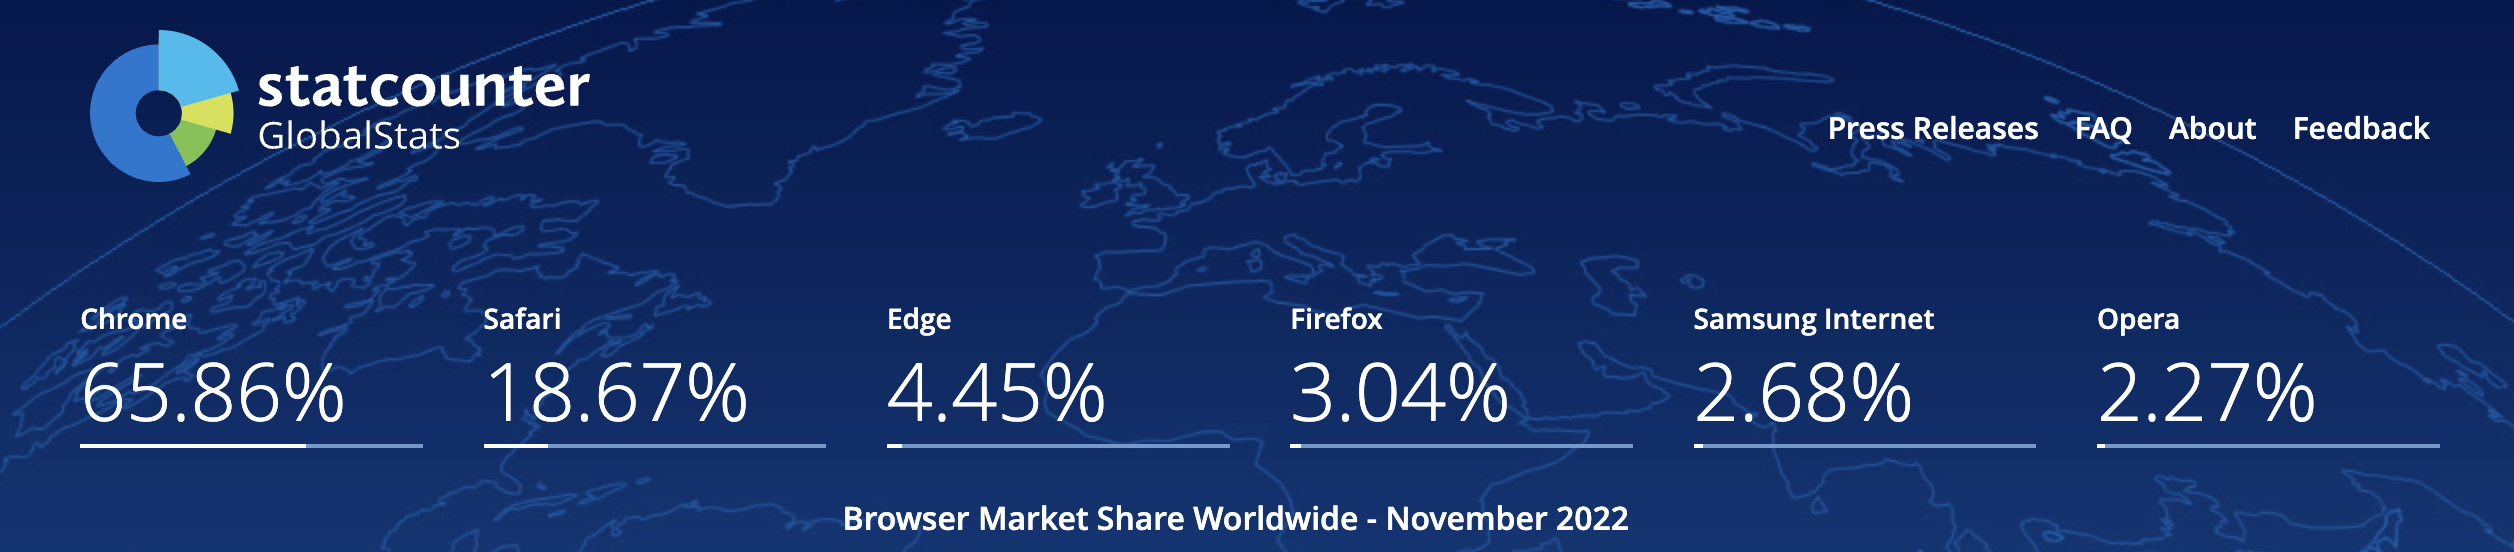 Browser Market Share Worldwide - November 2022